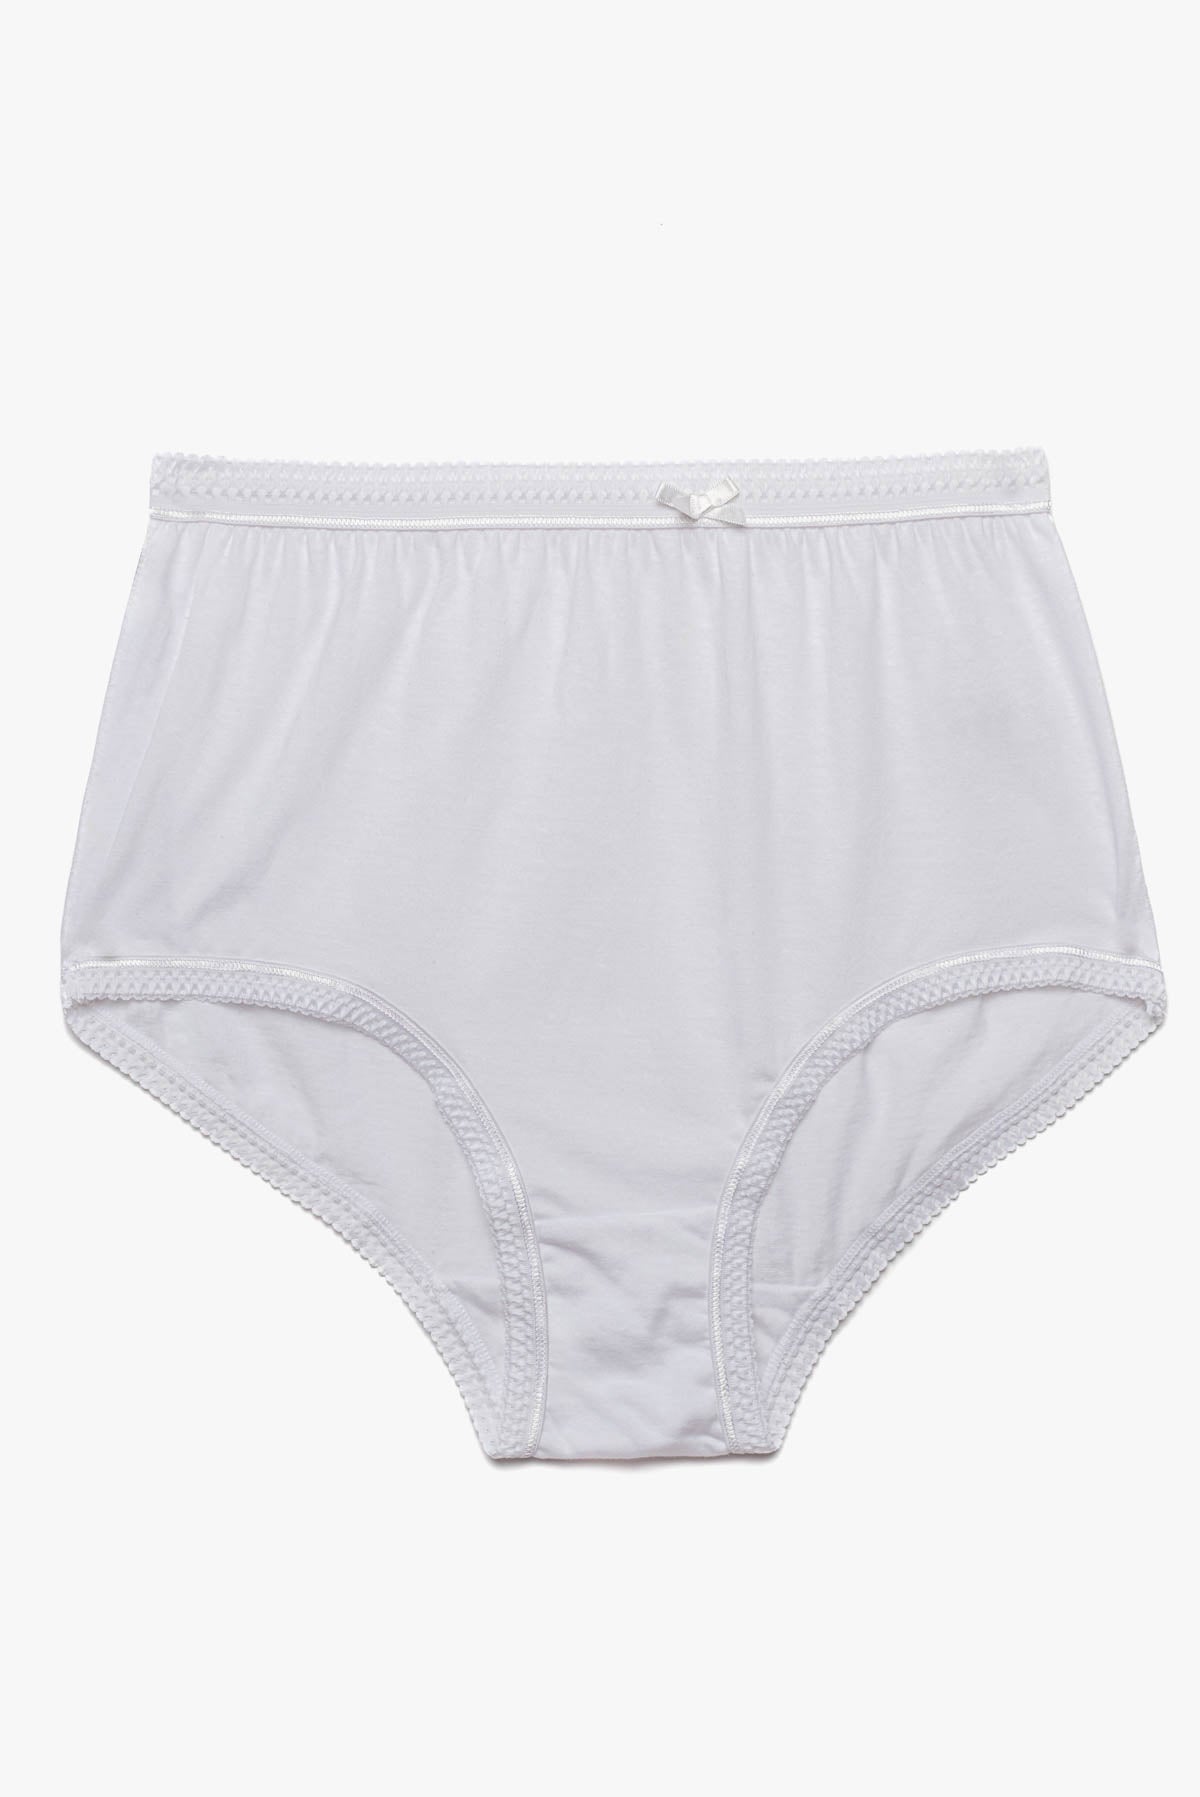 Lilgiuy Women's Solid Underwear Cotton StretchPanties Lingerie Women  Briefs(White,XL) Winter Fashion 2022 